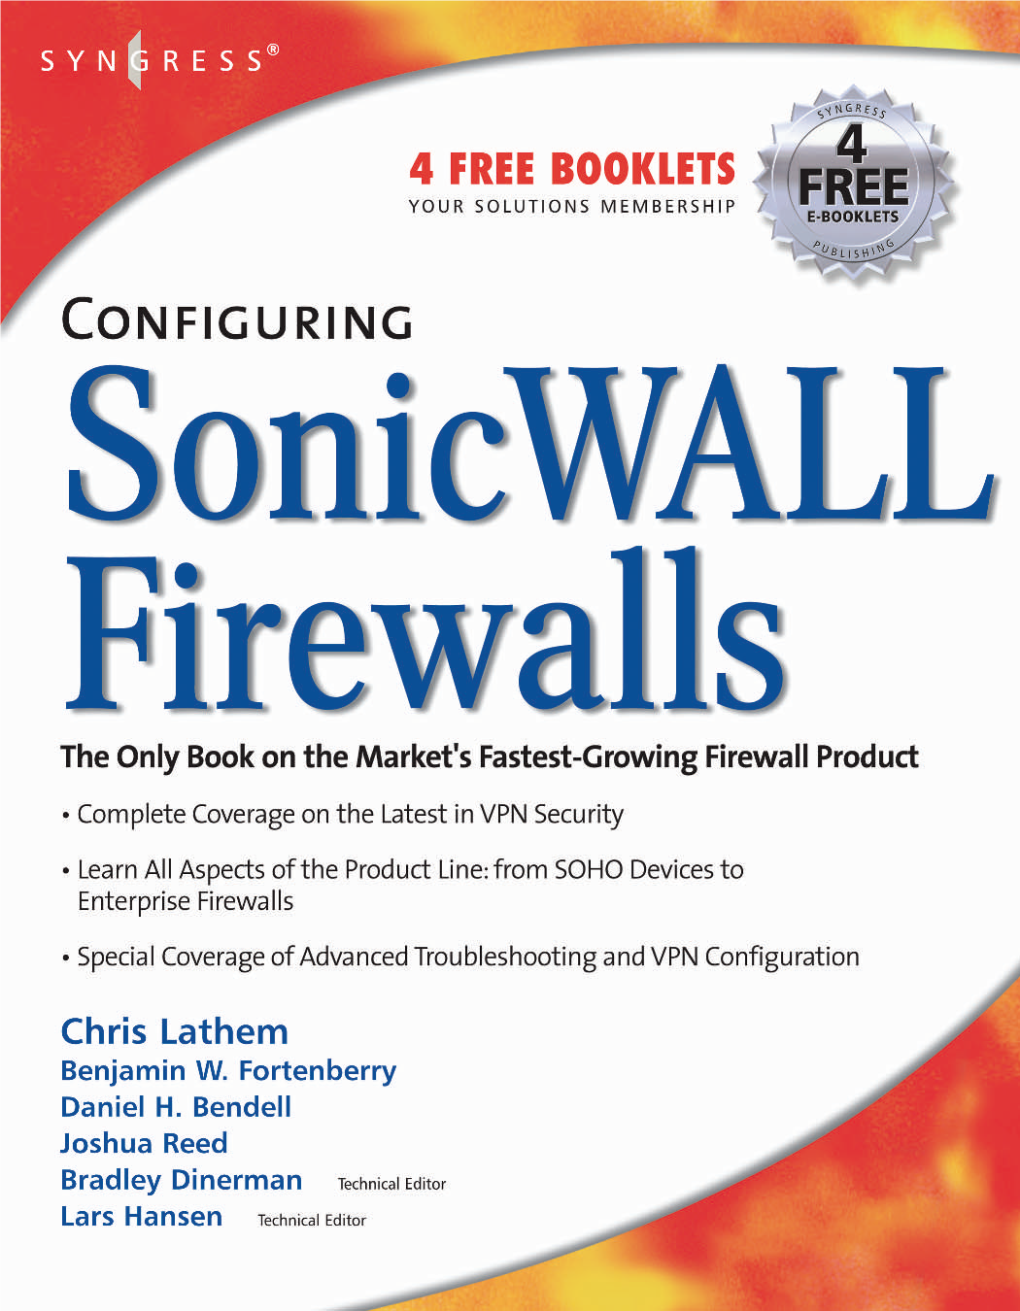 Configuring Sonicwall Firewalls.Pdf